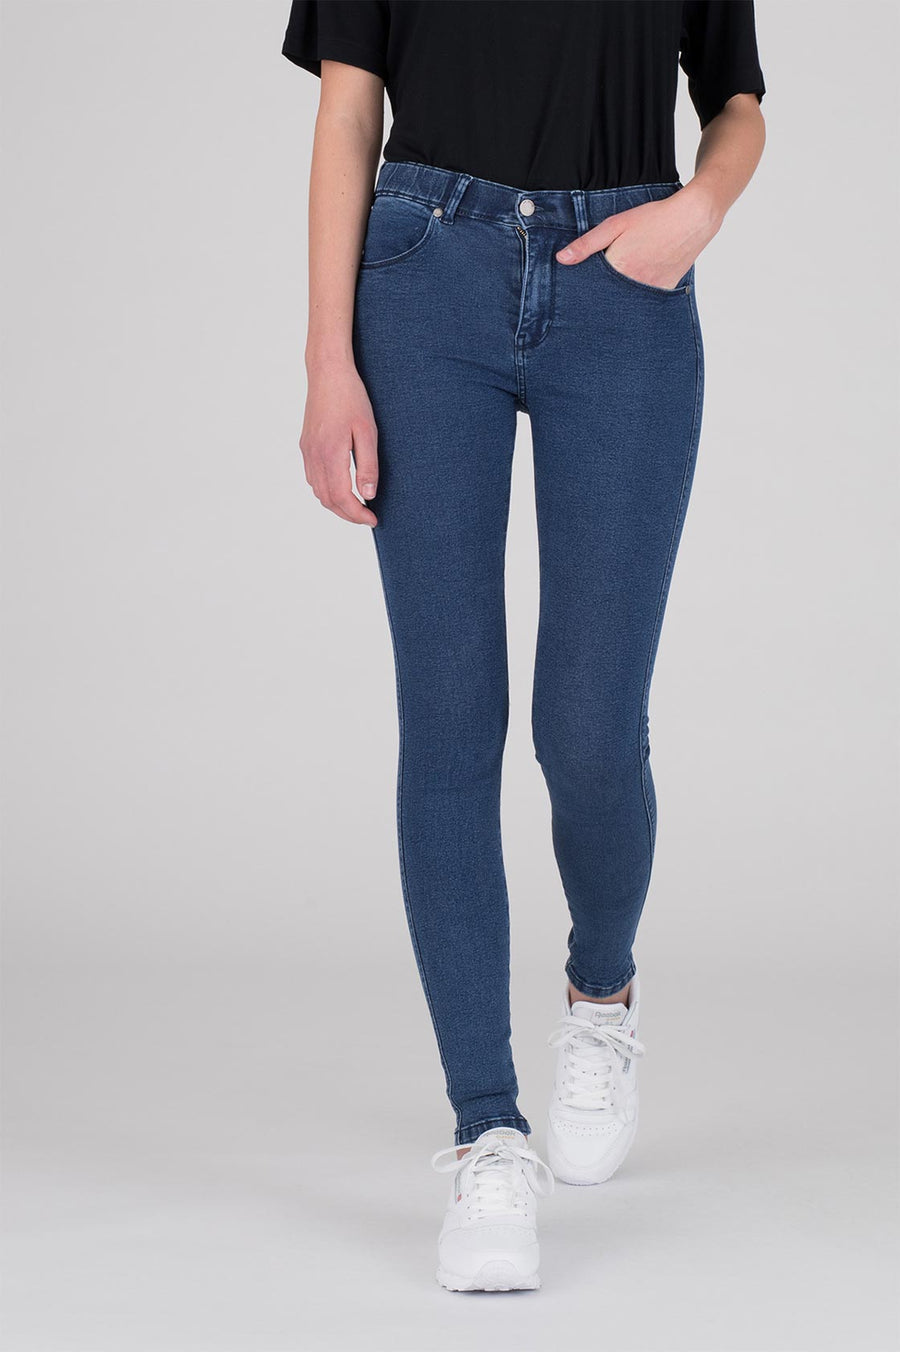 Lexy Jeans Pure Dark Blue - Dr Denim Jeans - Australia & NZ